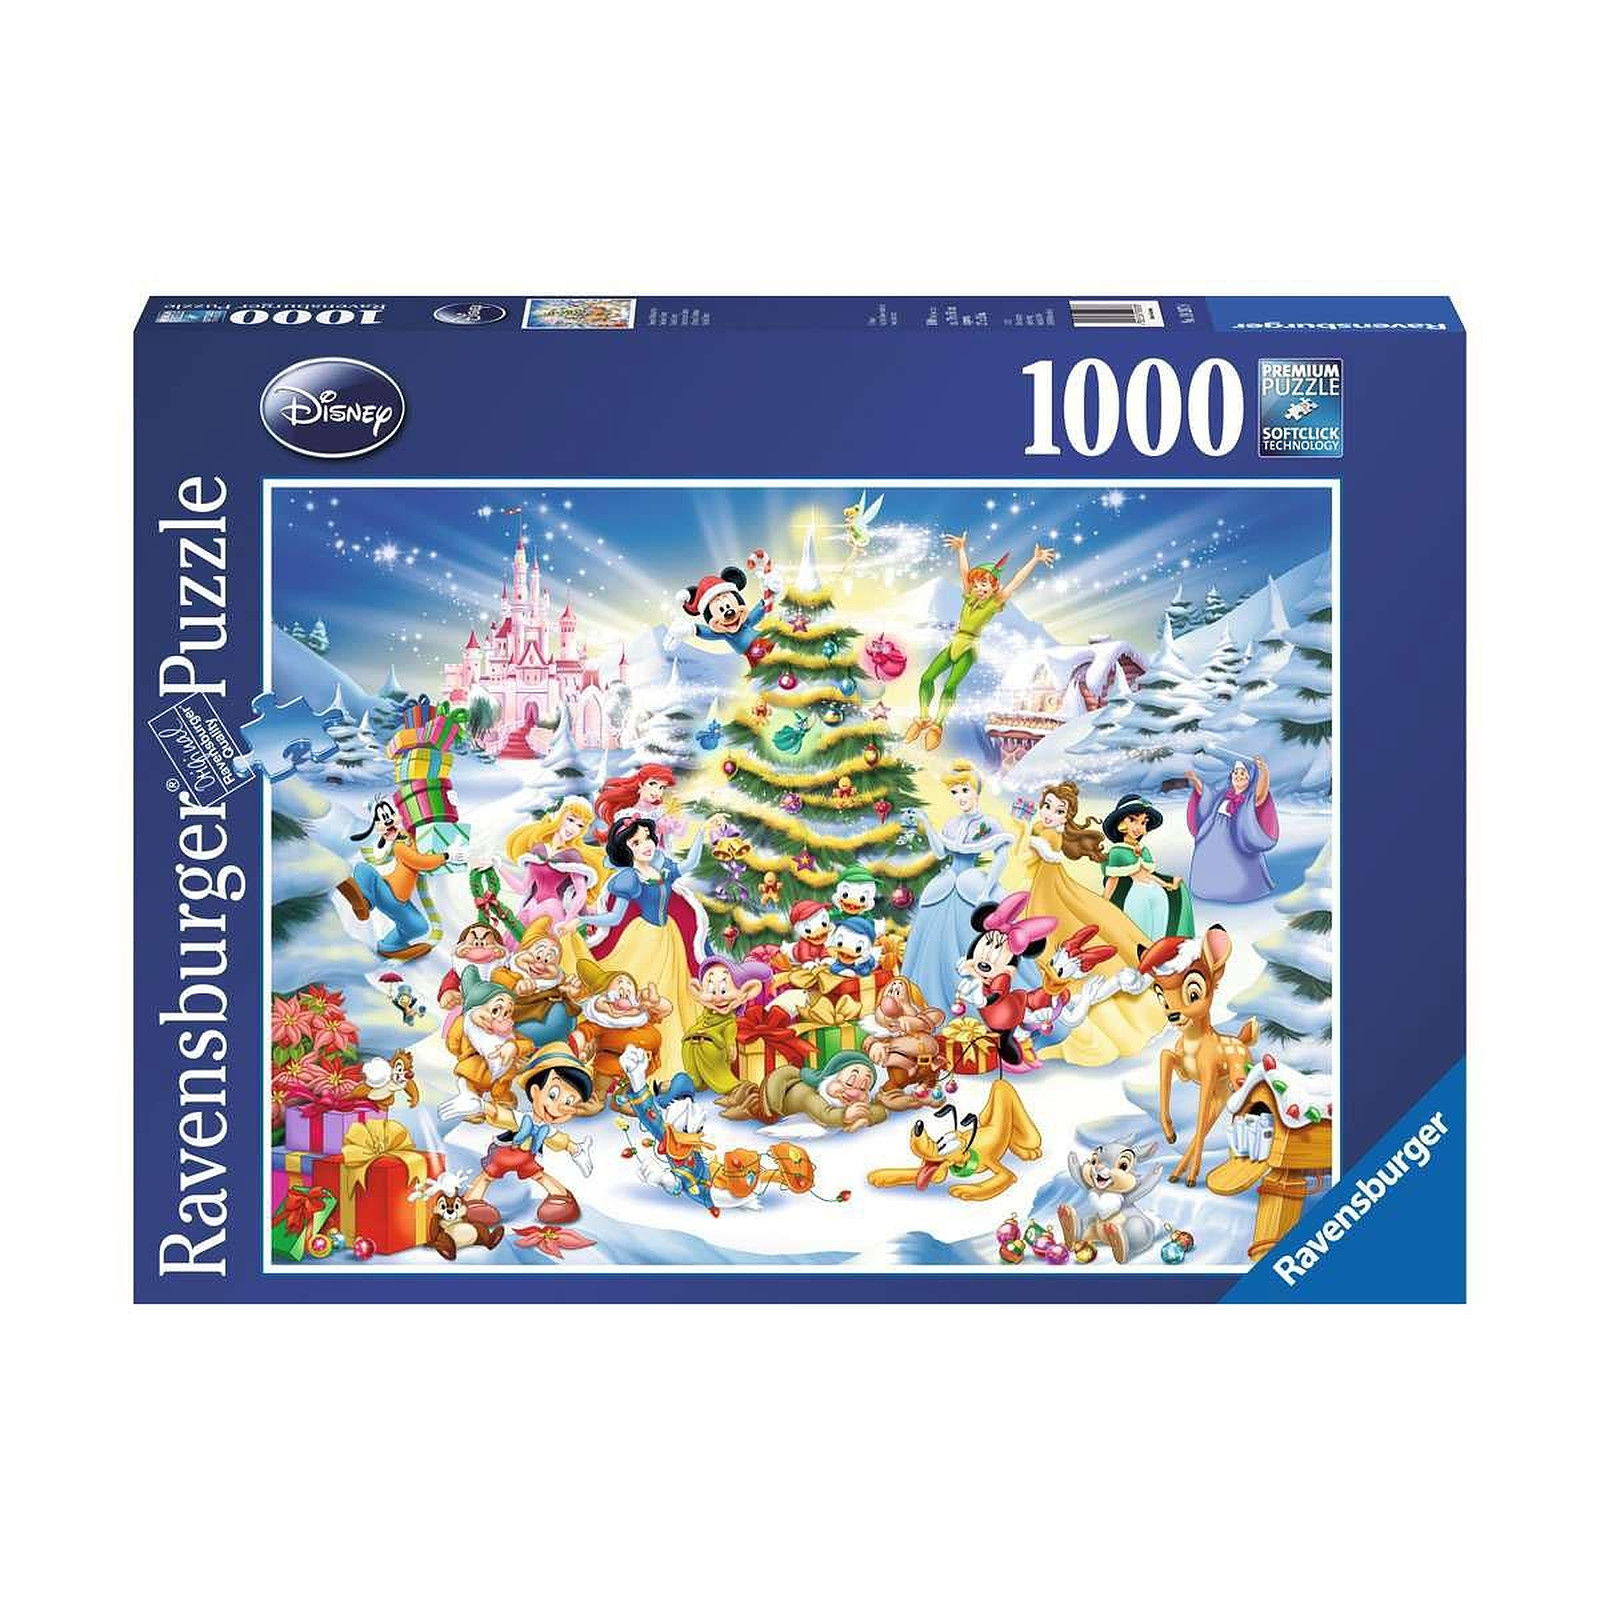 Disney - Puzzle Collector's Edition Le Noel de Disney (1000 pièces) - Puzzle Ravensburger